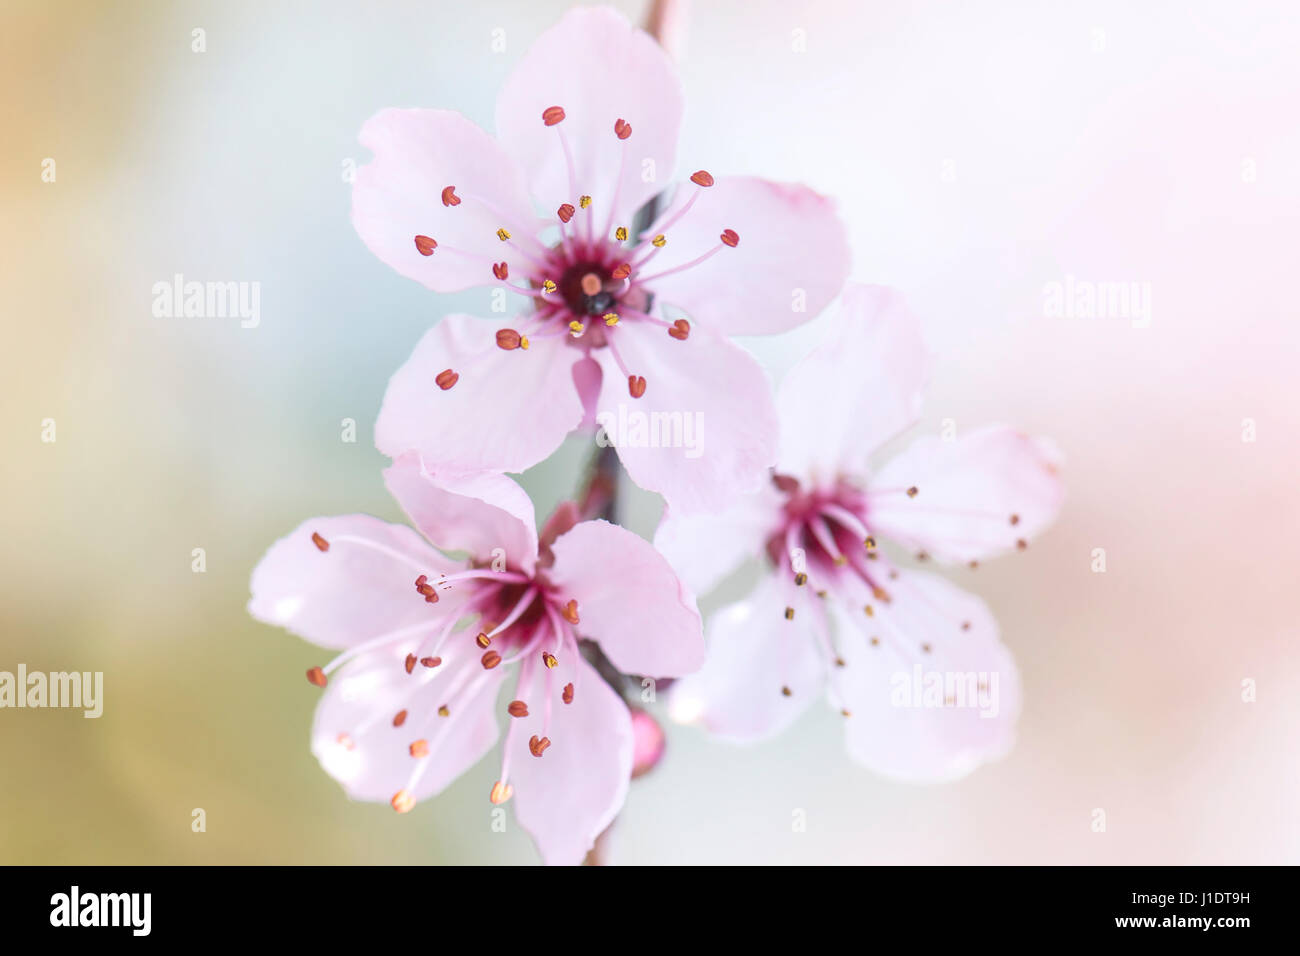 Close-up, high-key image of the delicate soft pink blossom of Prunus cerasifera Nigra - Black Cherry Plum Blossom Stock Photo